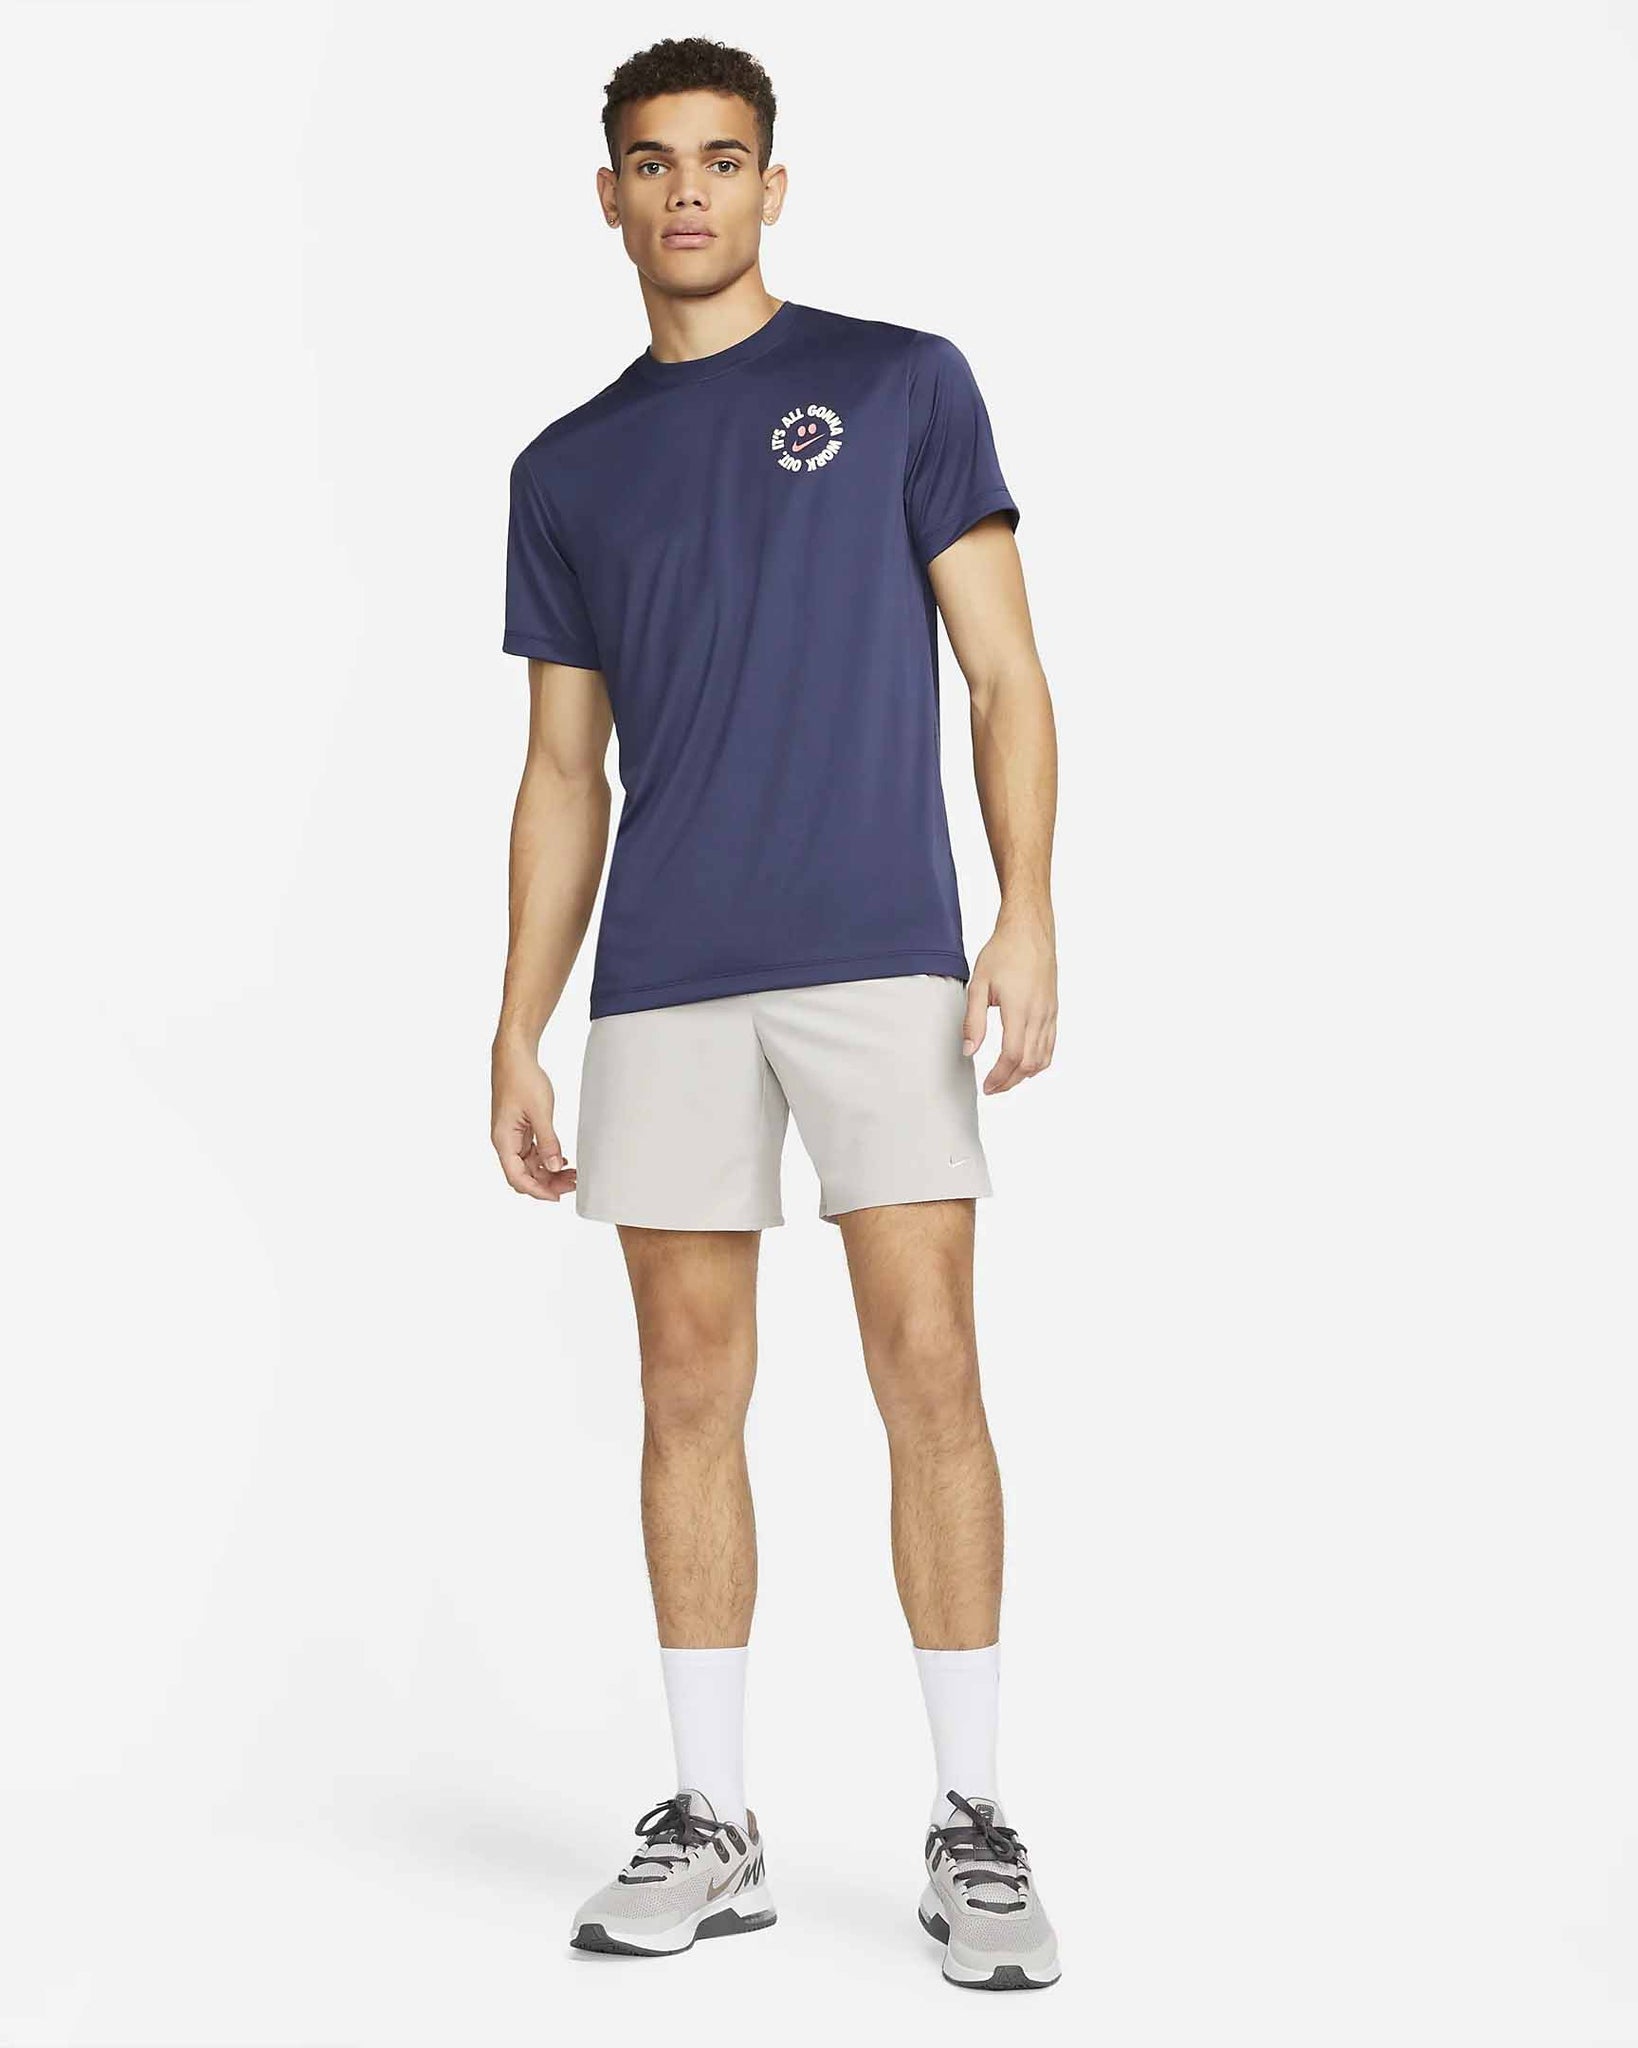 Nike It's All Rock Workout DRI-Fit T-Shirt